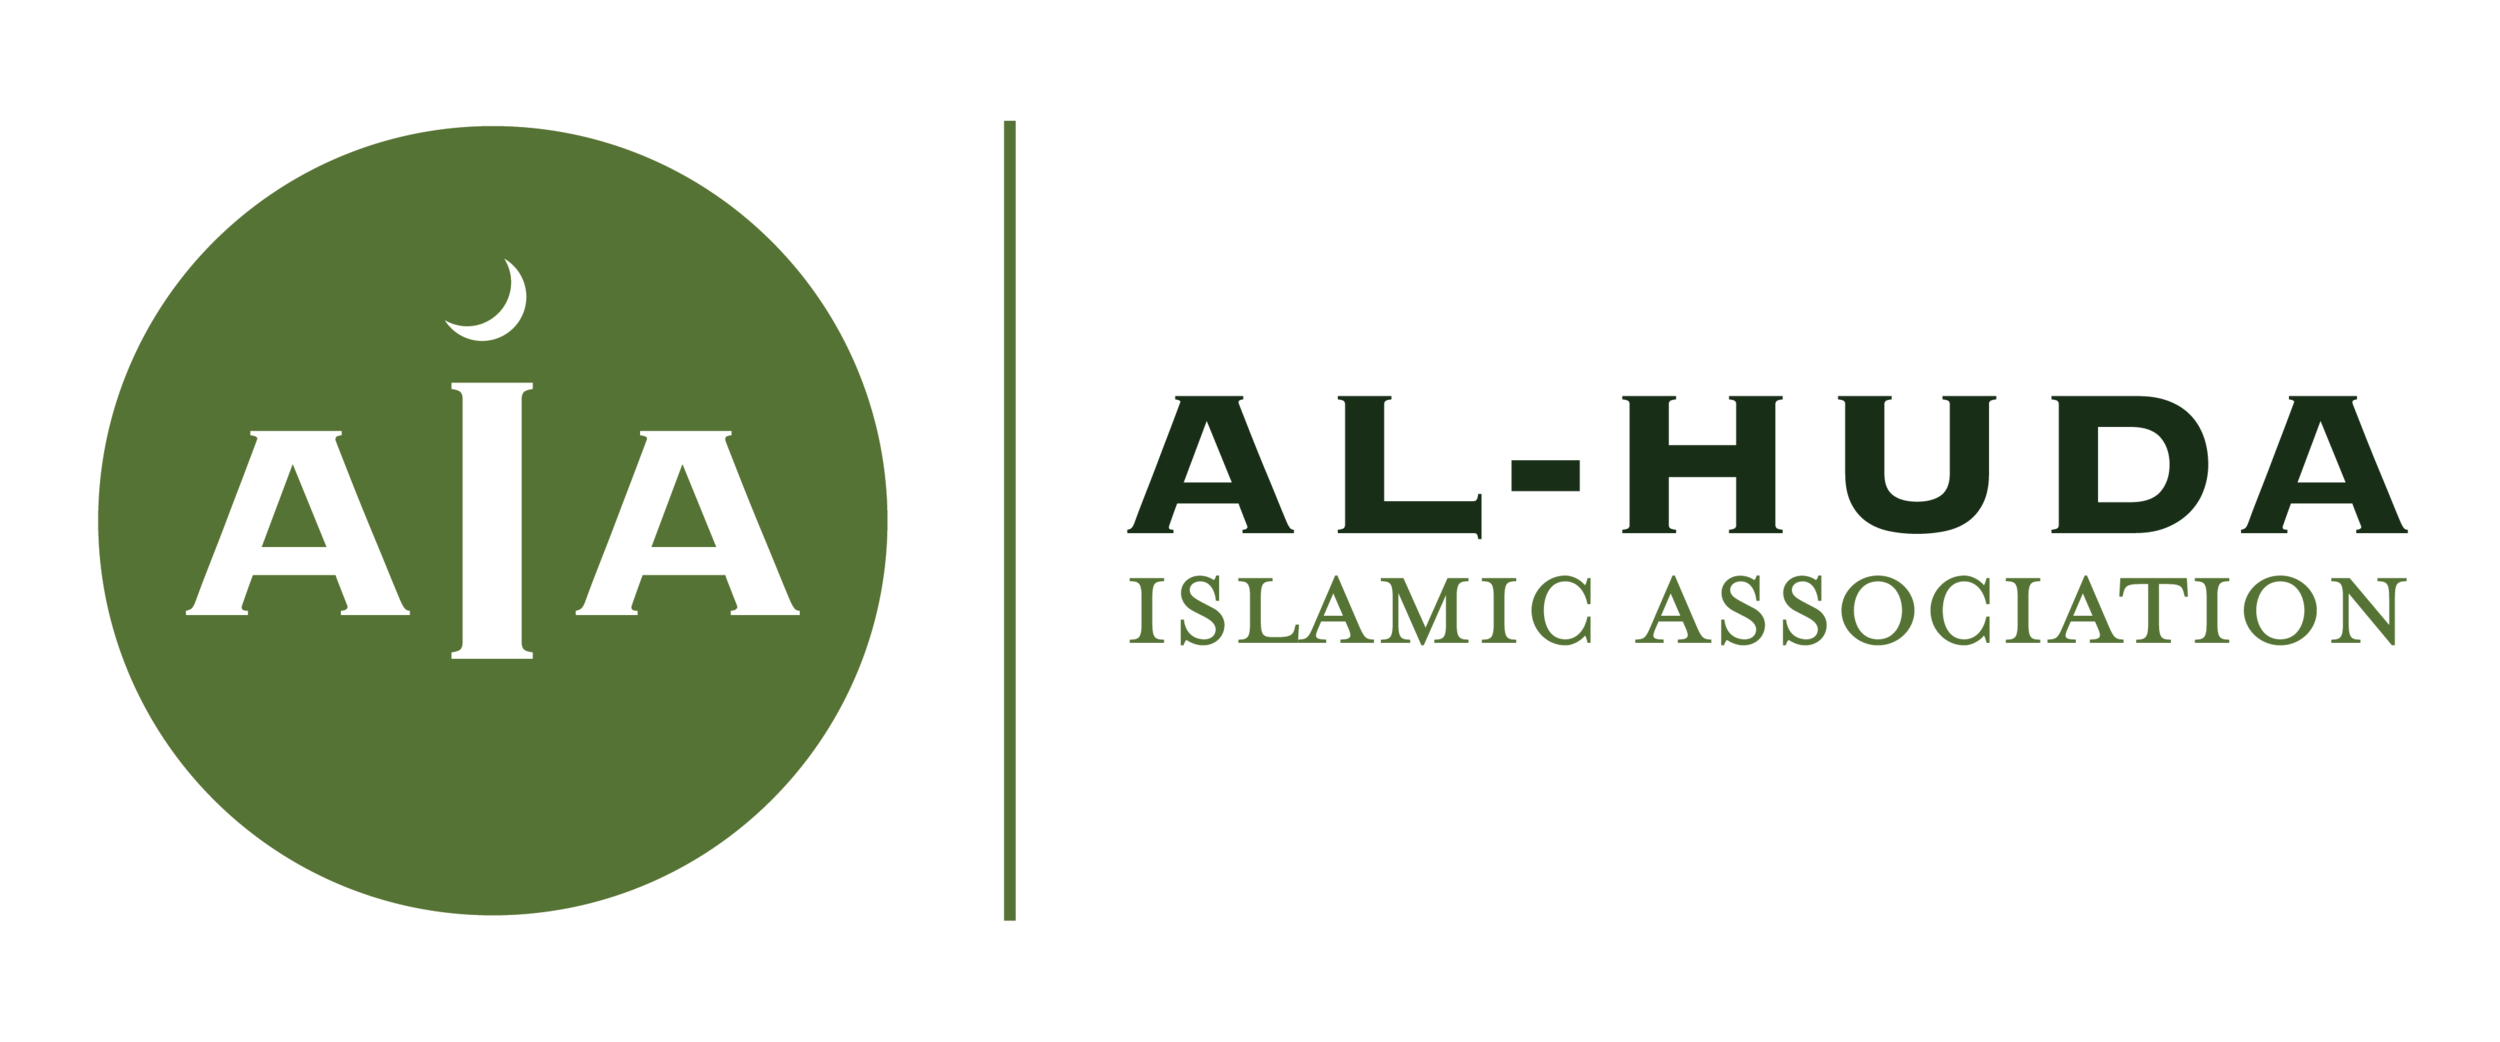 Al-Huda Islamic Association